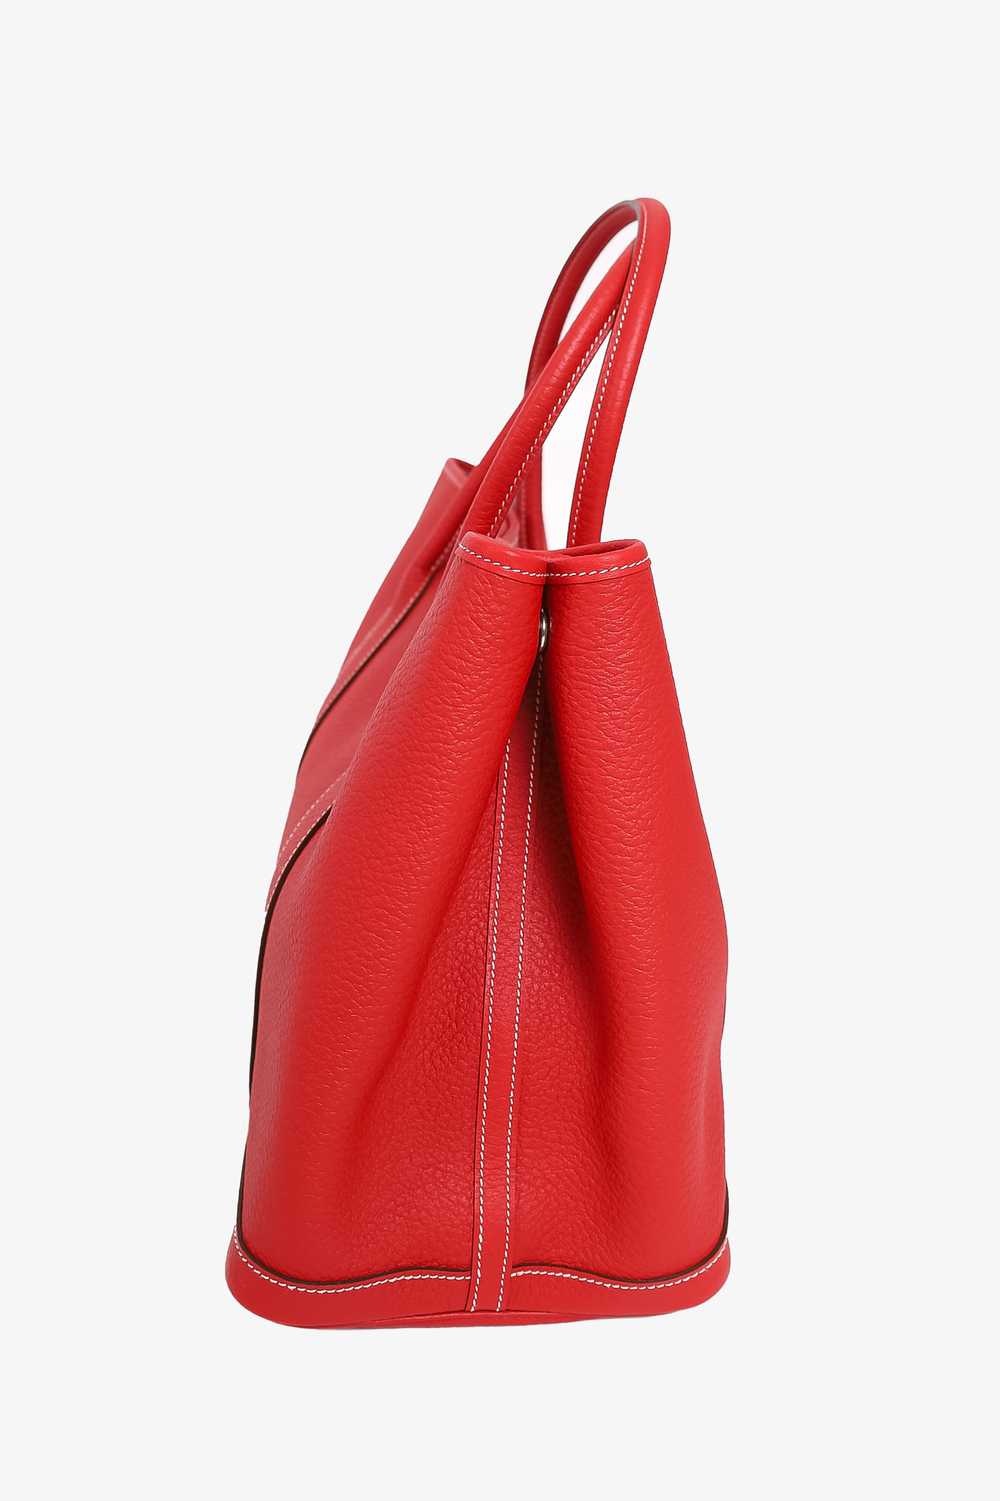 Hermès 2013 Red Negonda Garden Party 36 Tote Bag - image 8